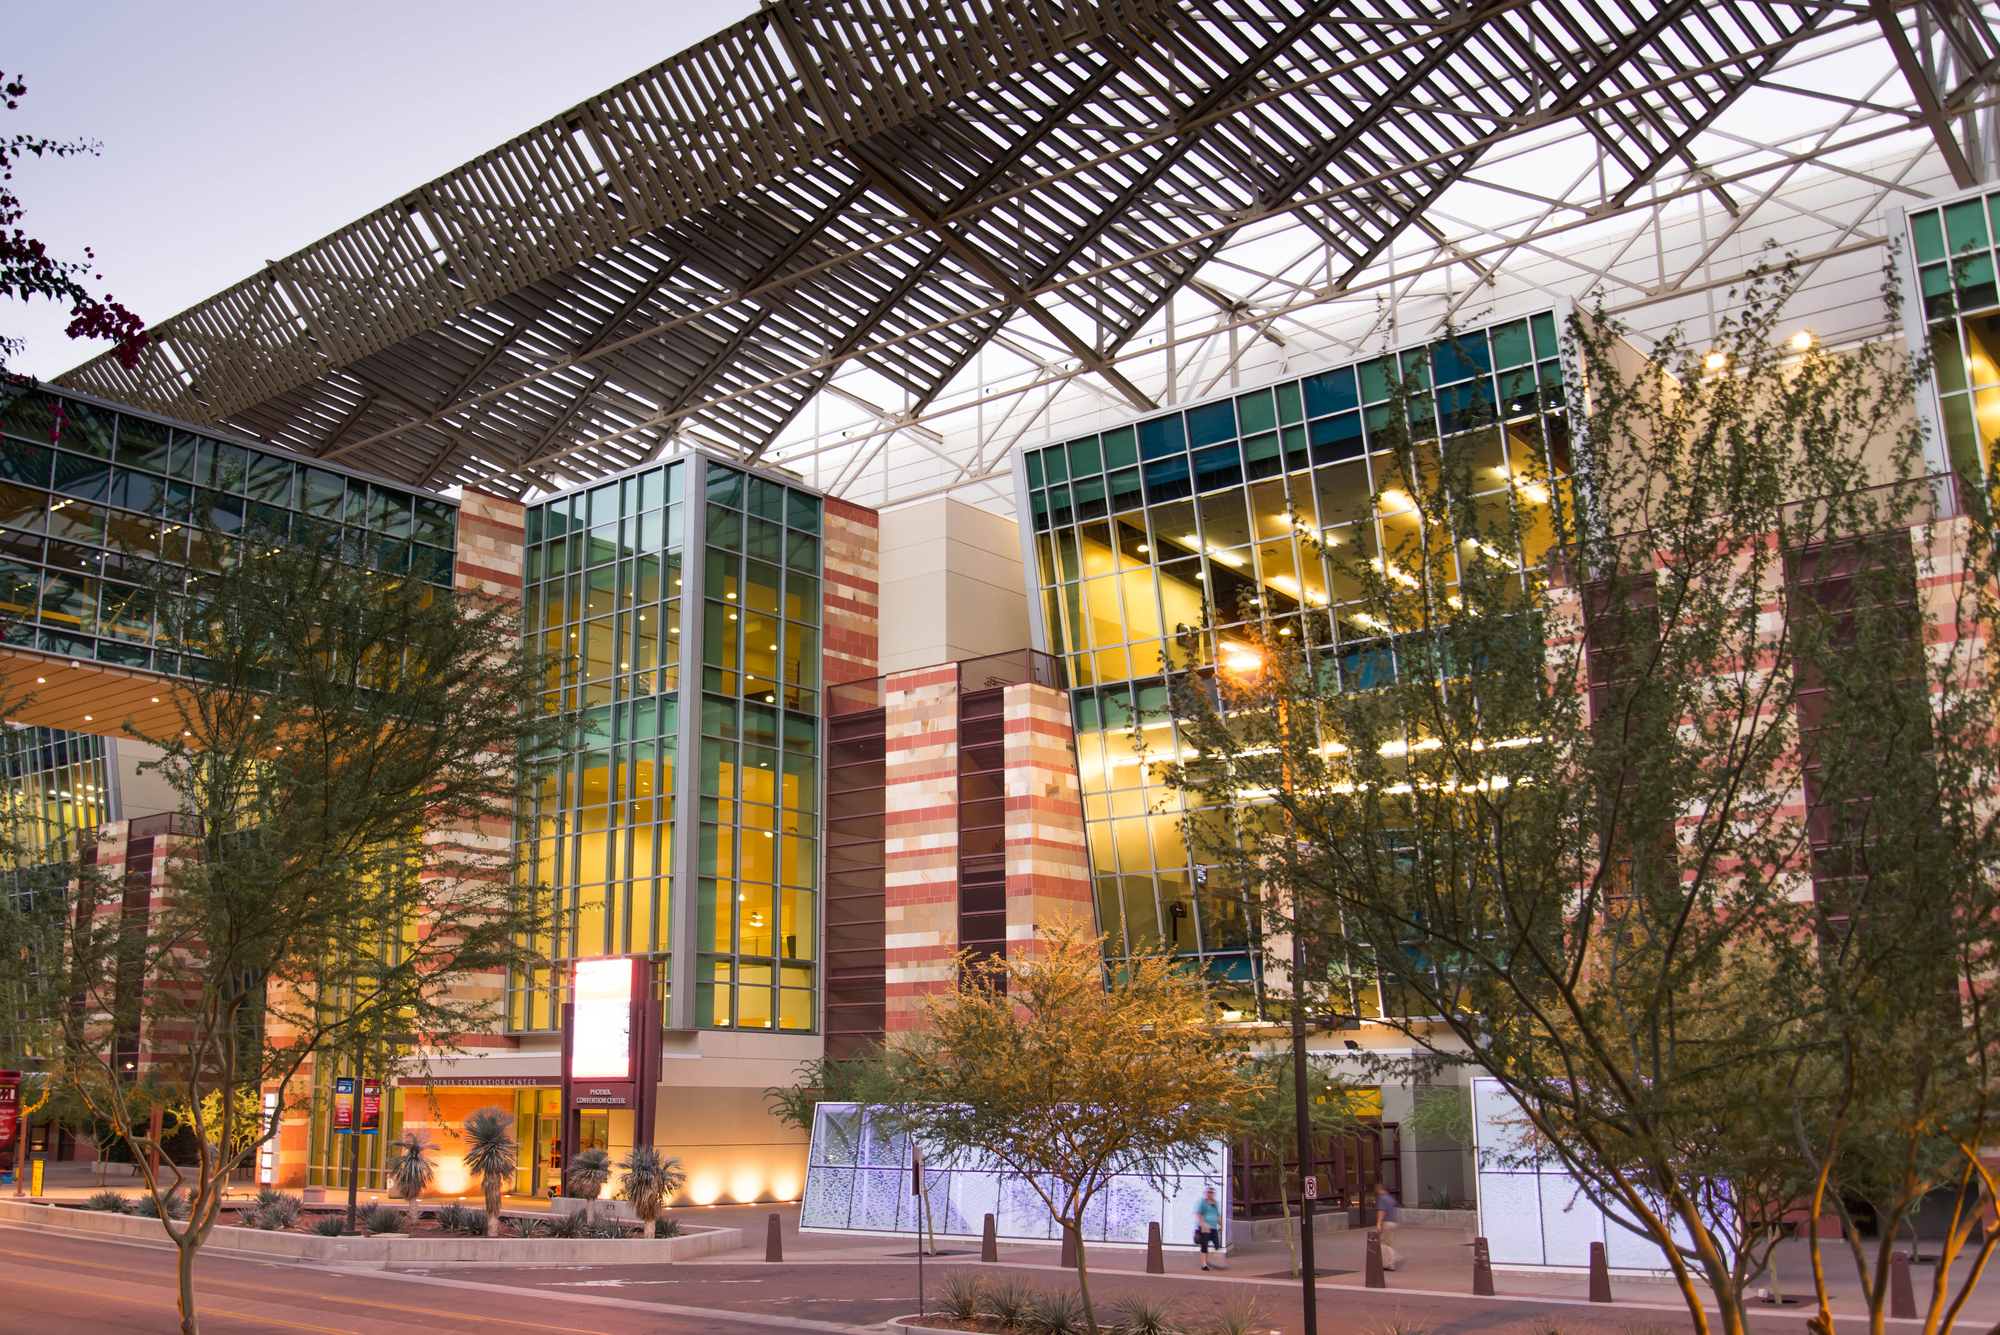 Convention Center exterior in Phoenix, Arizona